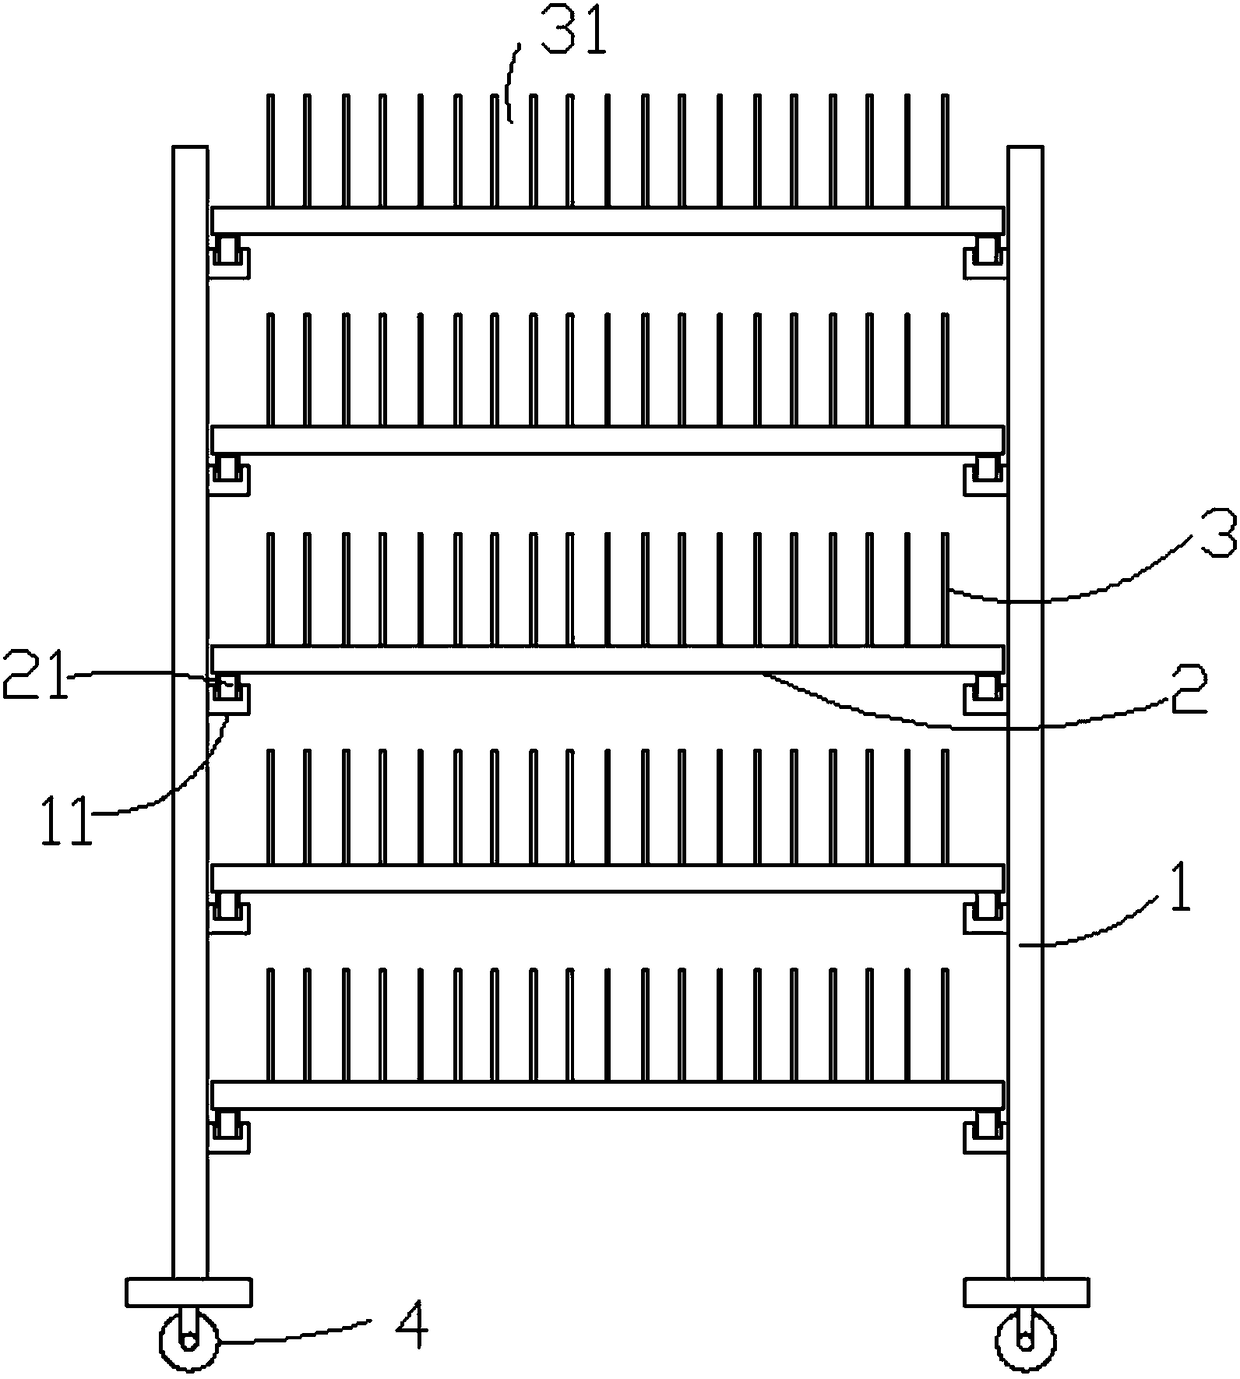 PCB placing rack